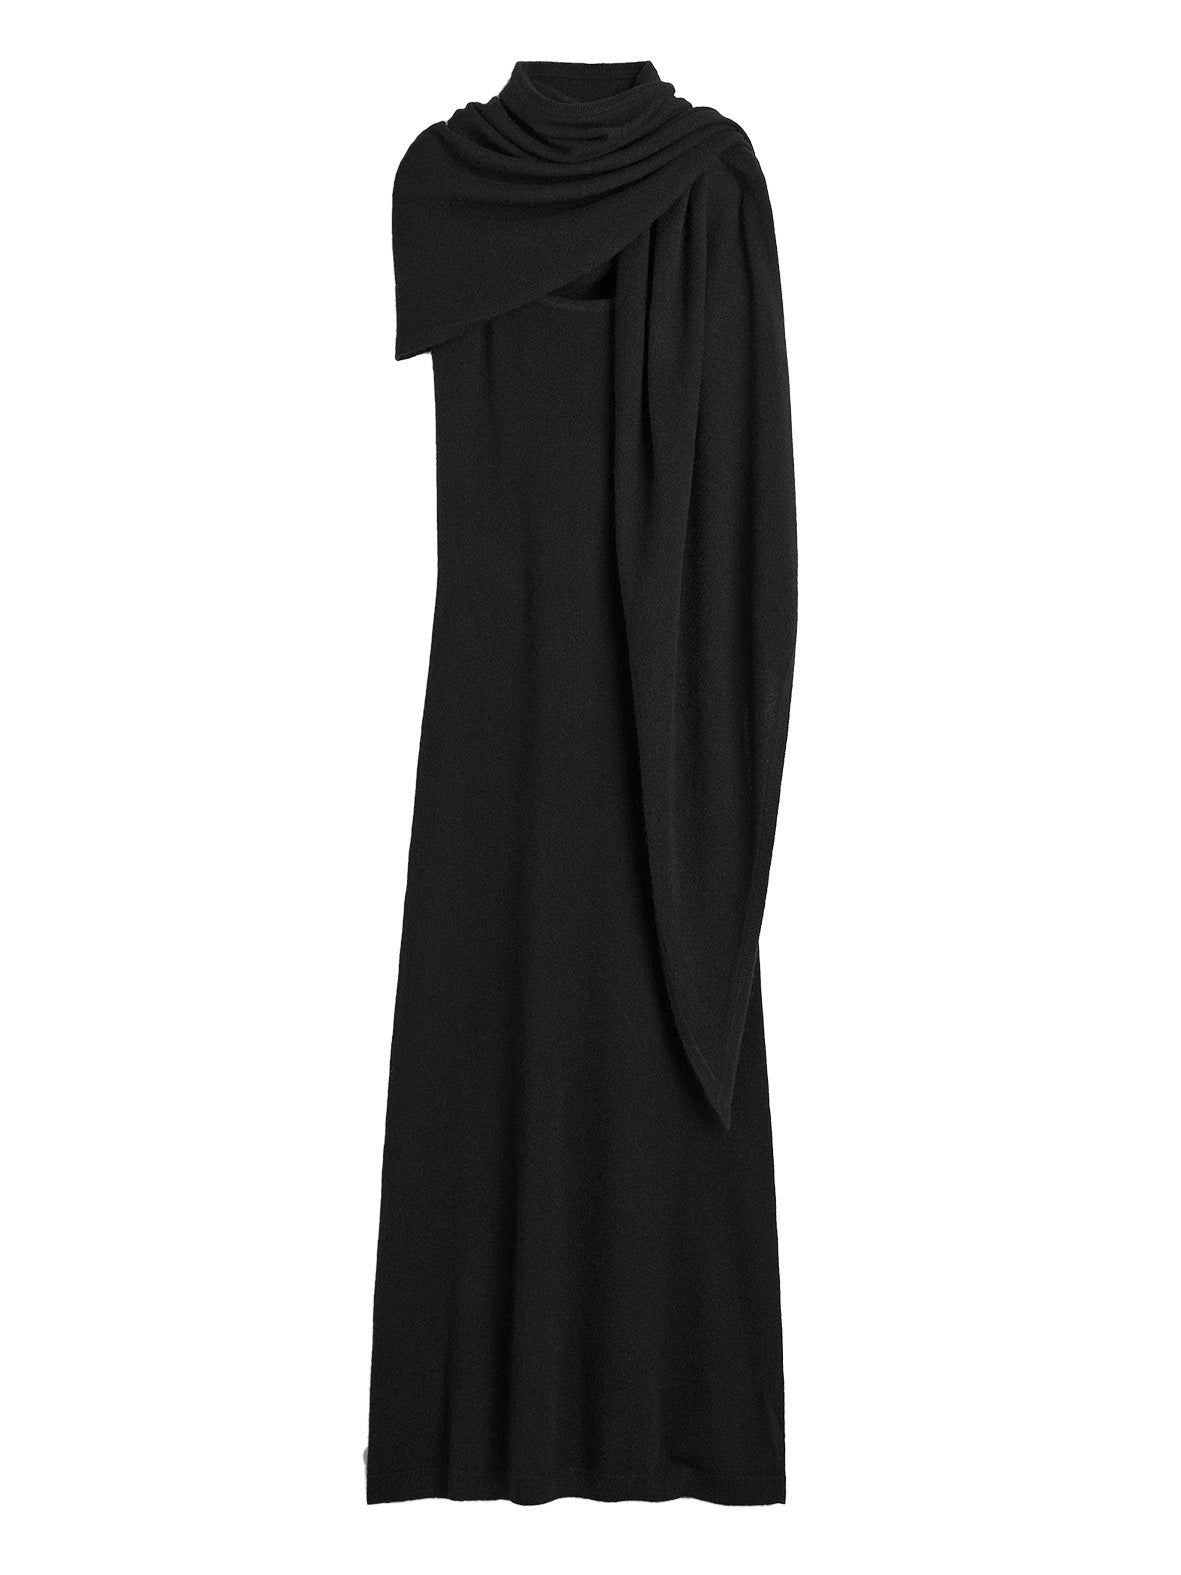 Cashmere Shawl Dress Black